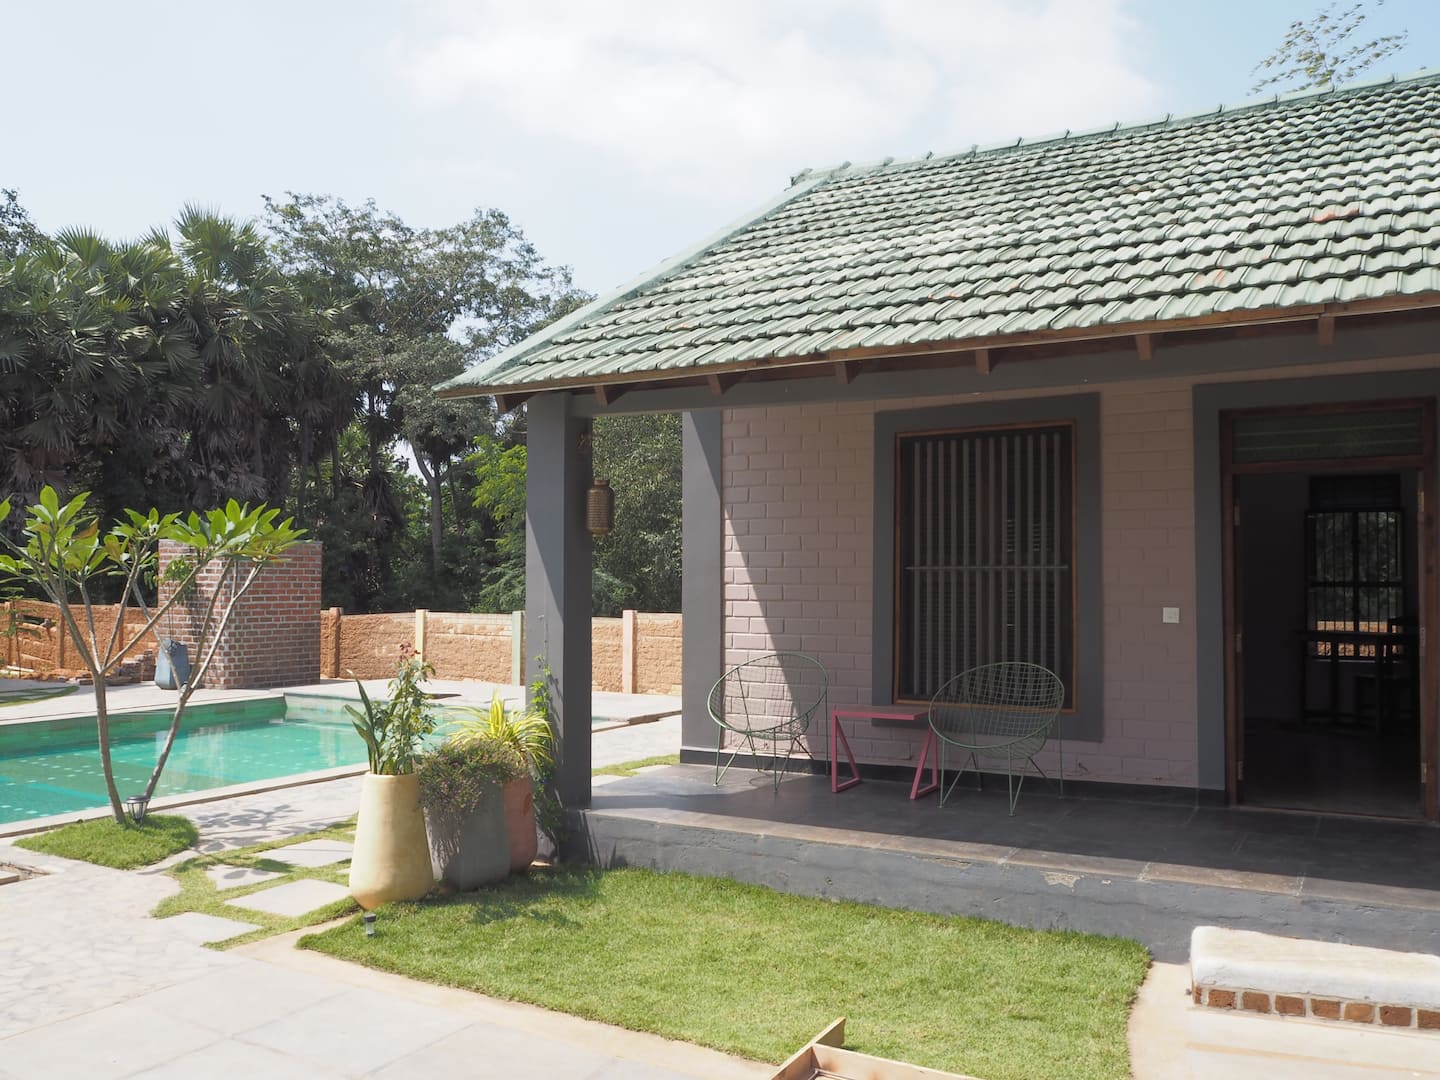 Kavas airbnb accommodations in Pondicherry